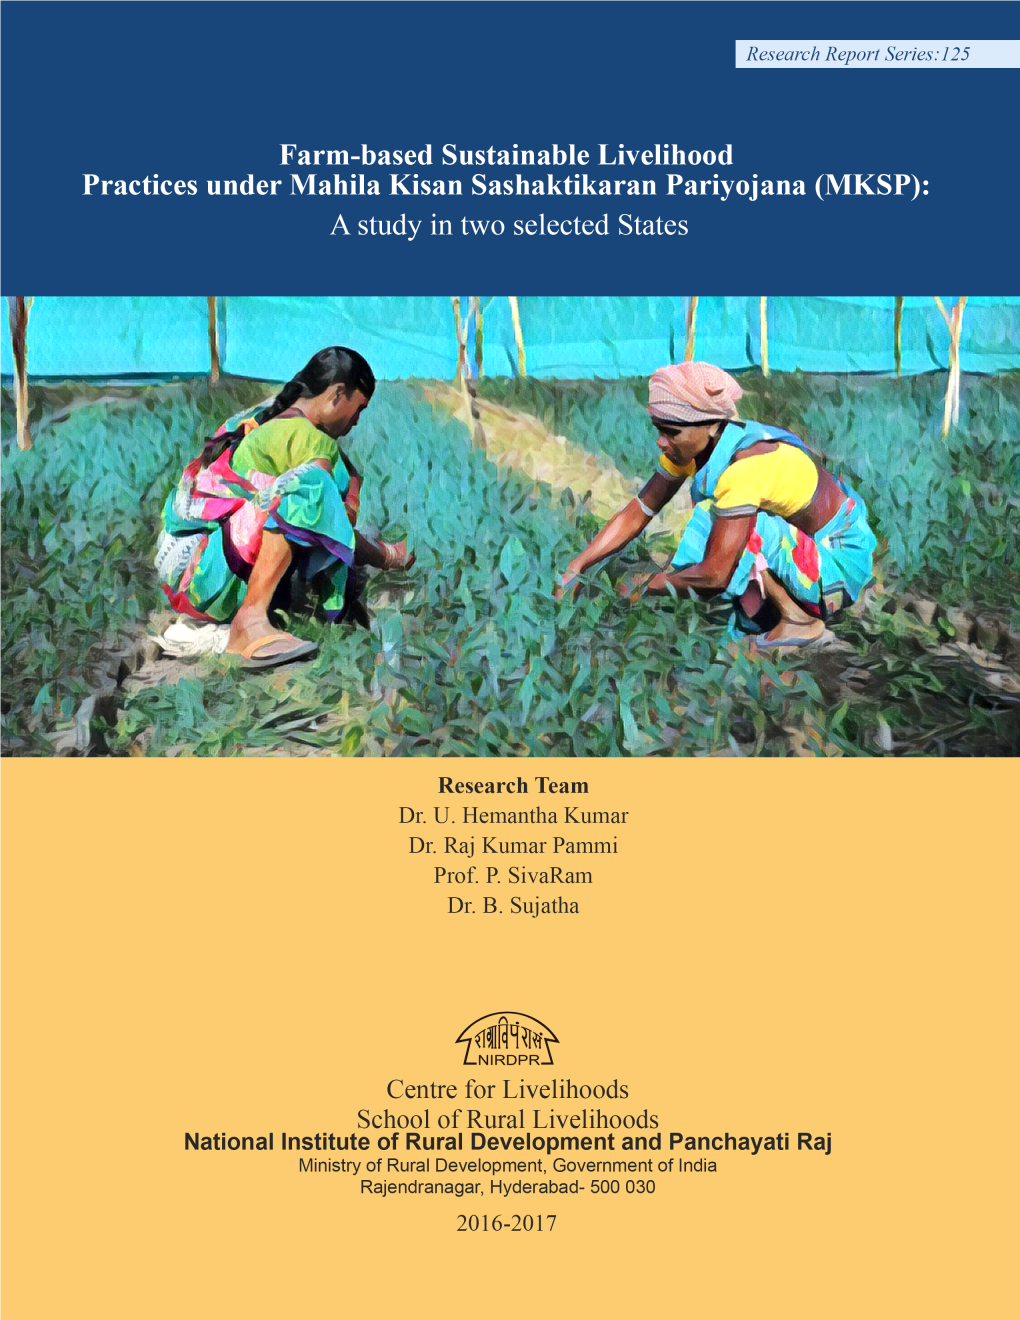 Farm-Based Sustainable Livelihood Practices Under Mahila Kisan Sashaktikaran Pariyojana (MKSP): a Study in Two Selected States